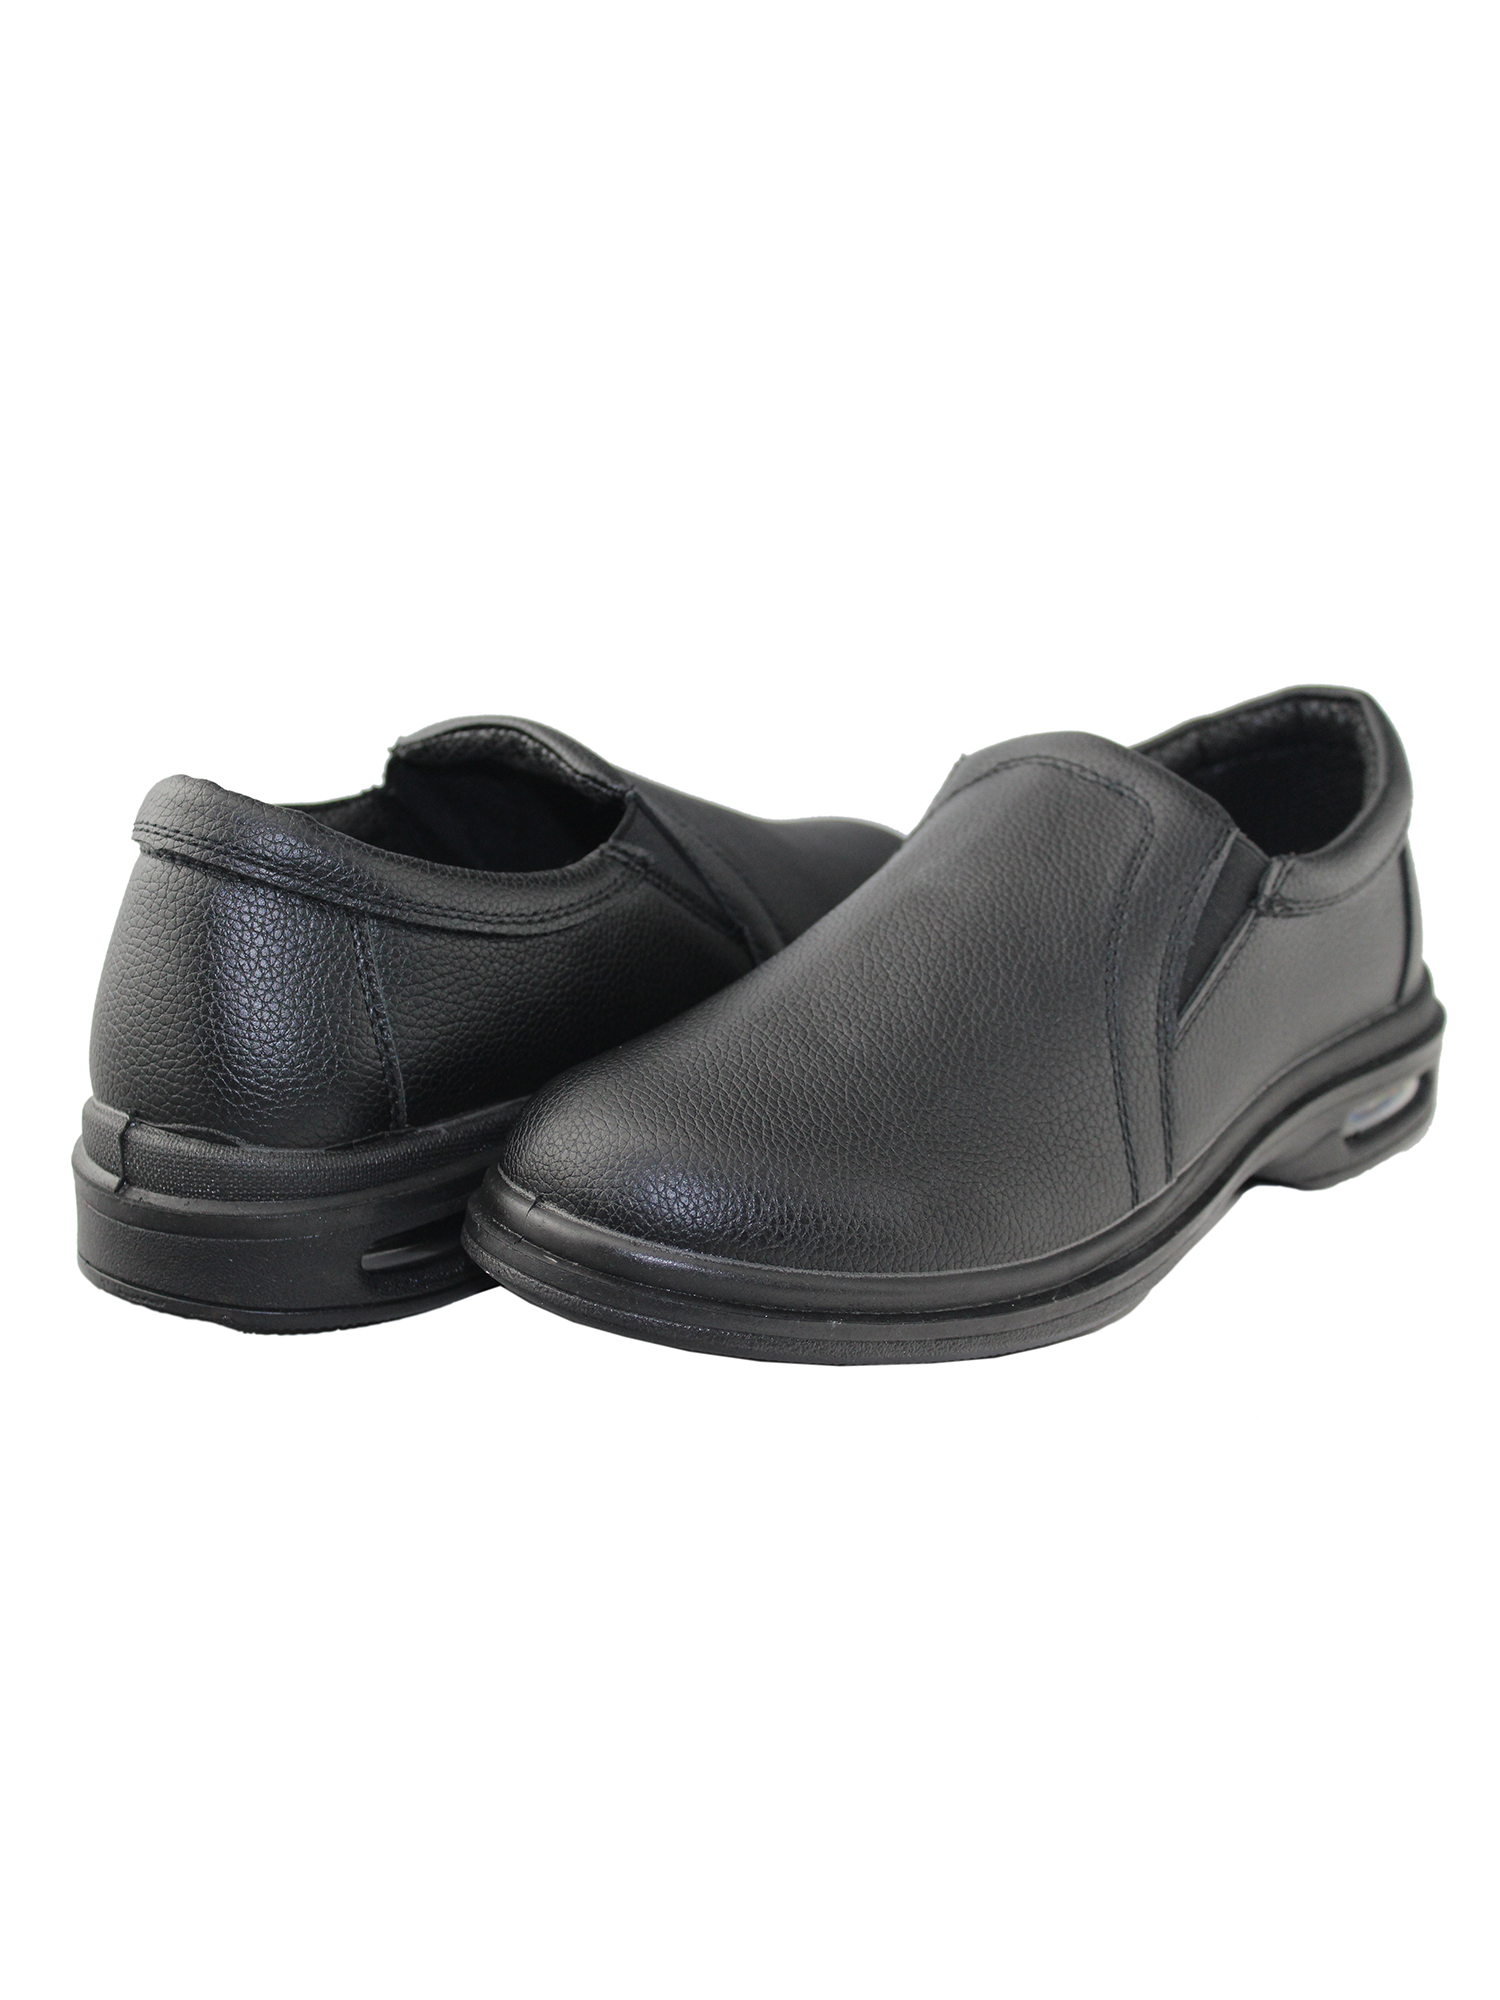 Tanleewa Men's Leather Work Shoes Anti-slip Waterproof Pull-on Casual Dress Shoe Size 10.5 - image 1 of 5